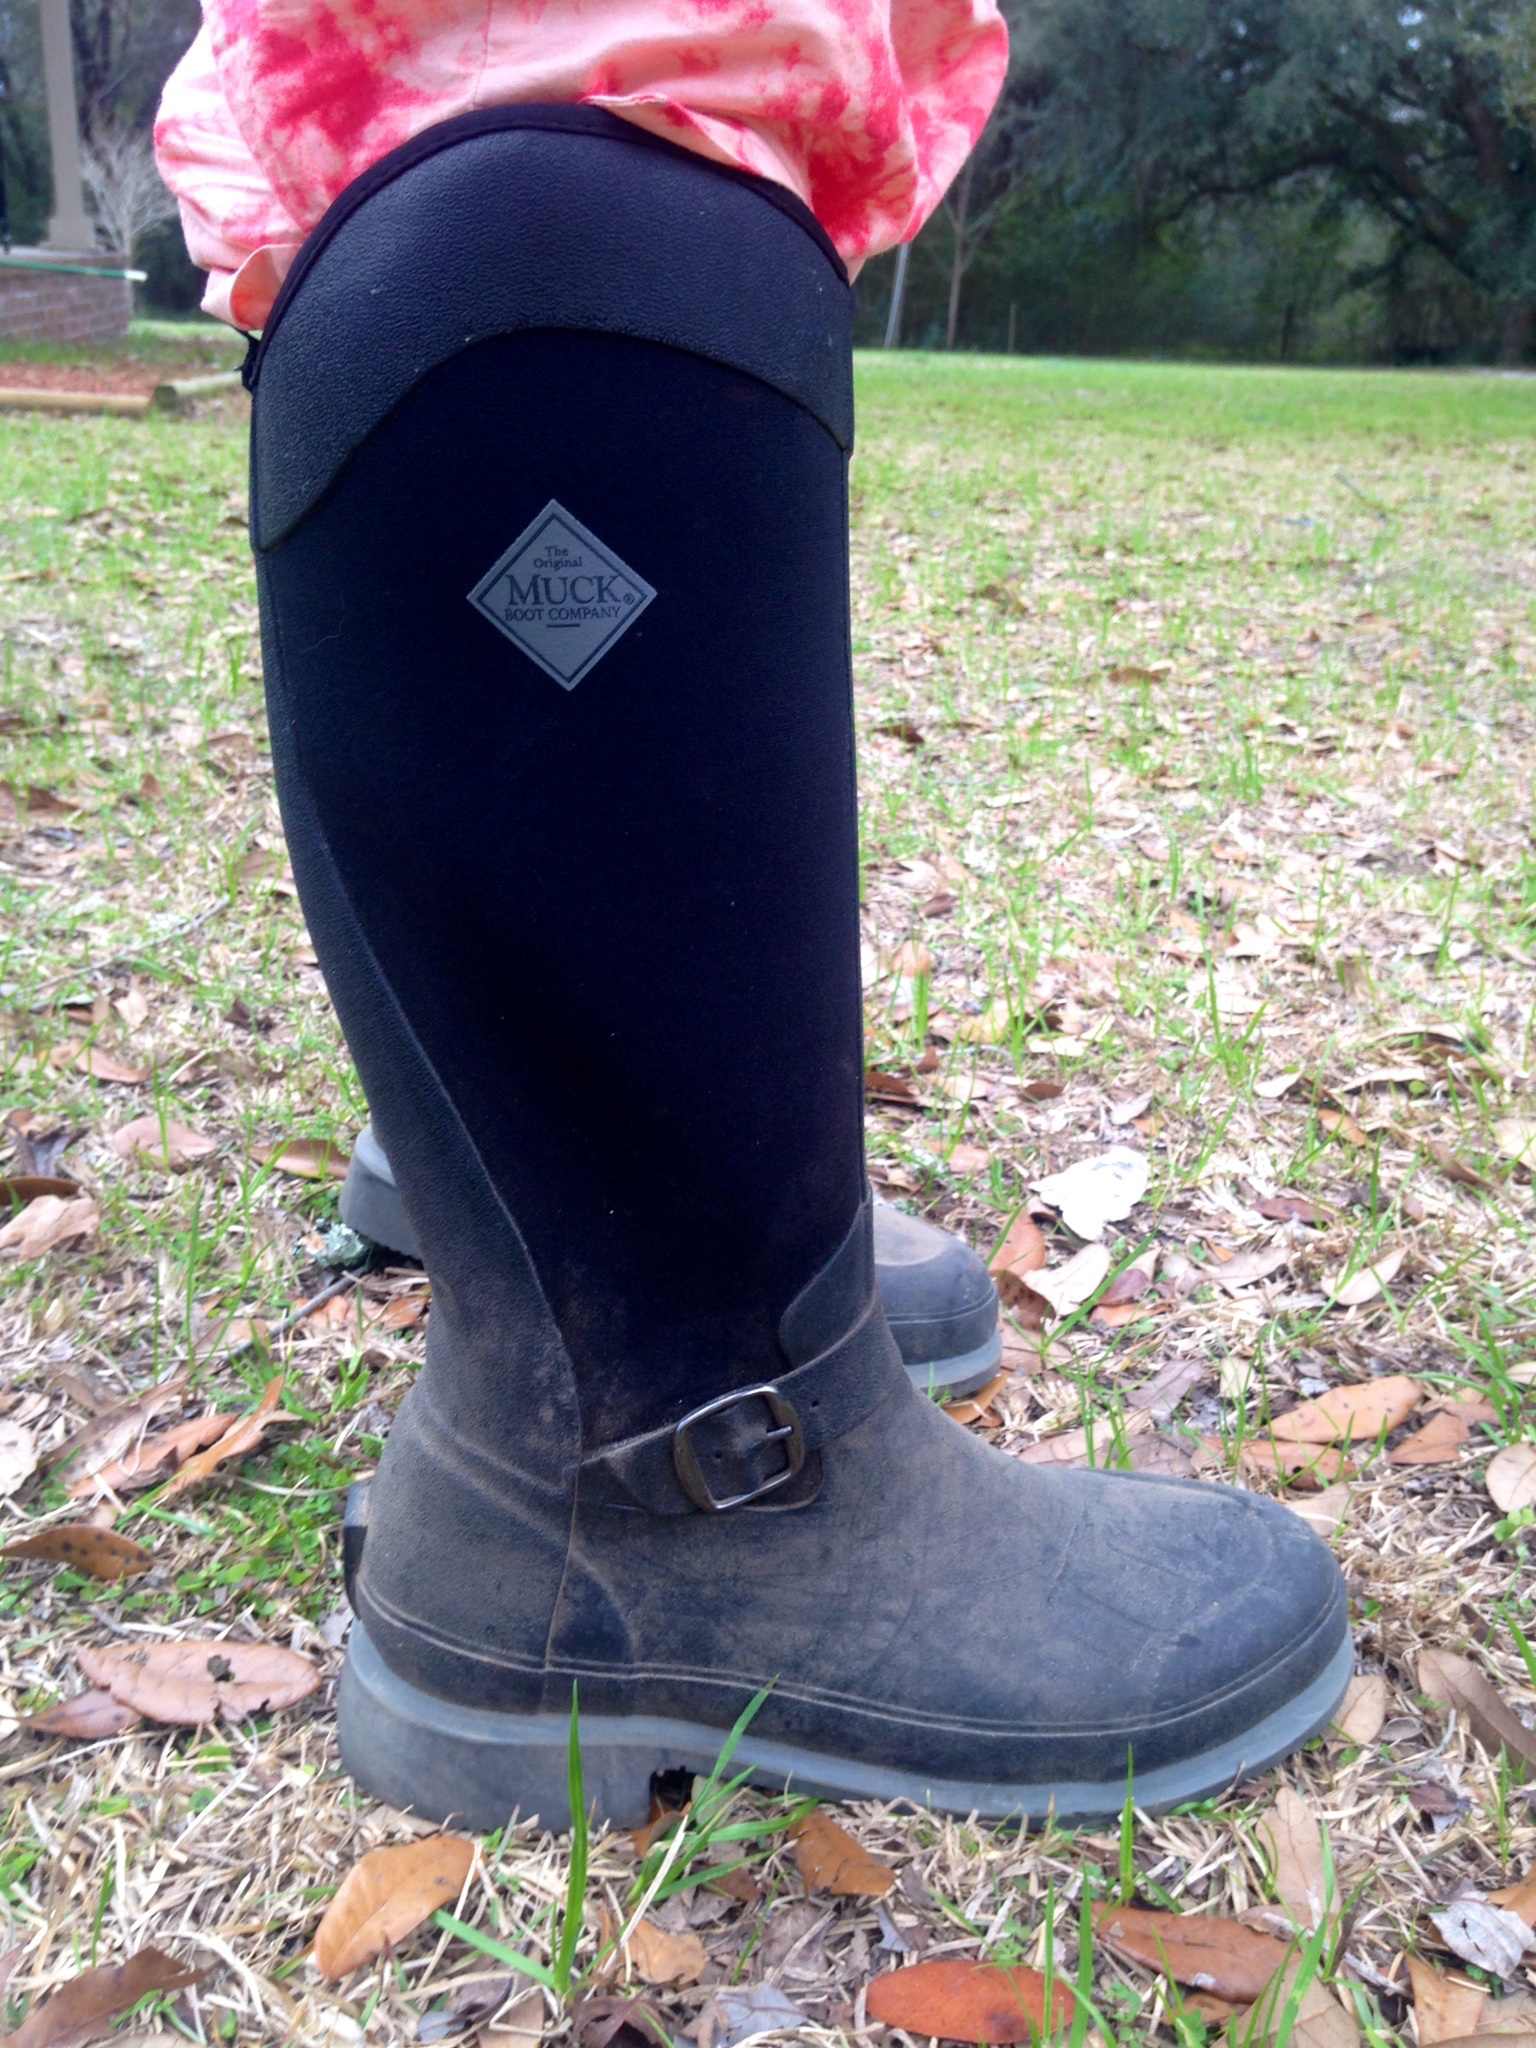 muck equestrian boots